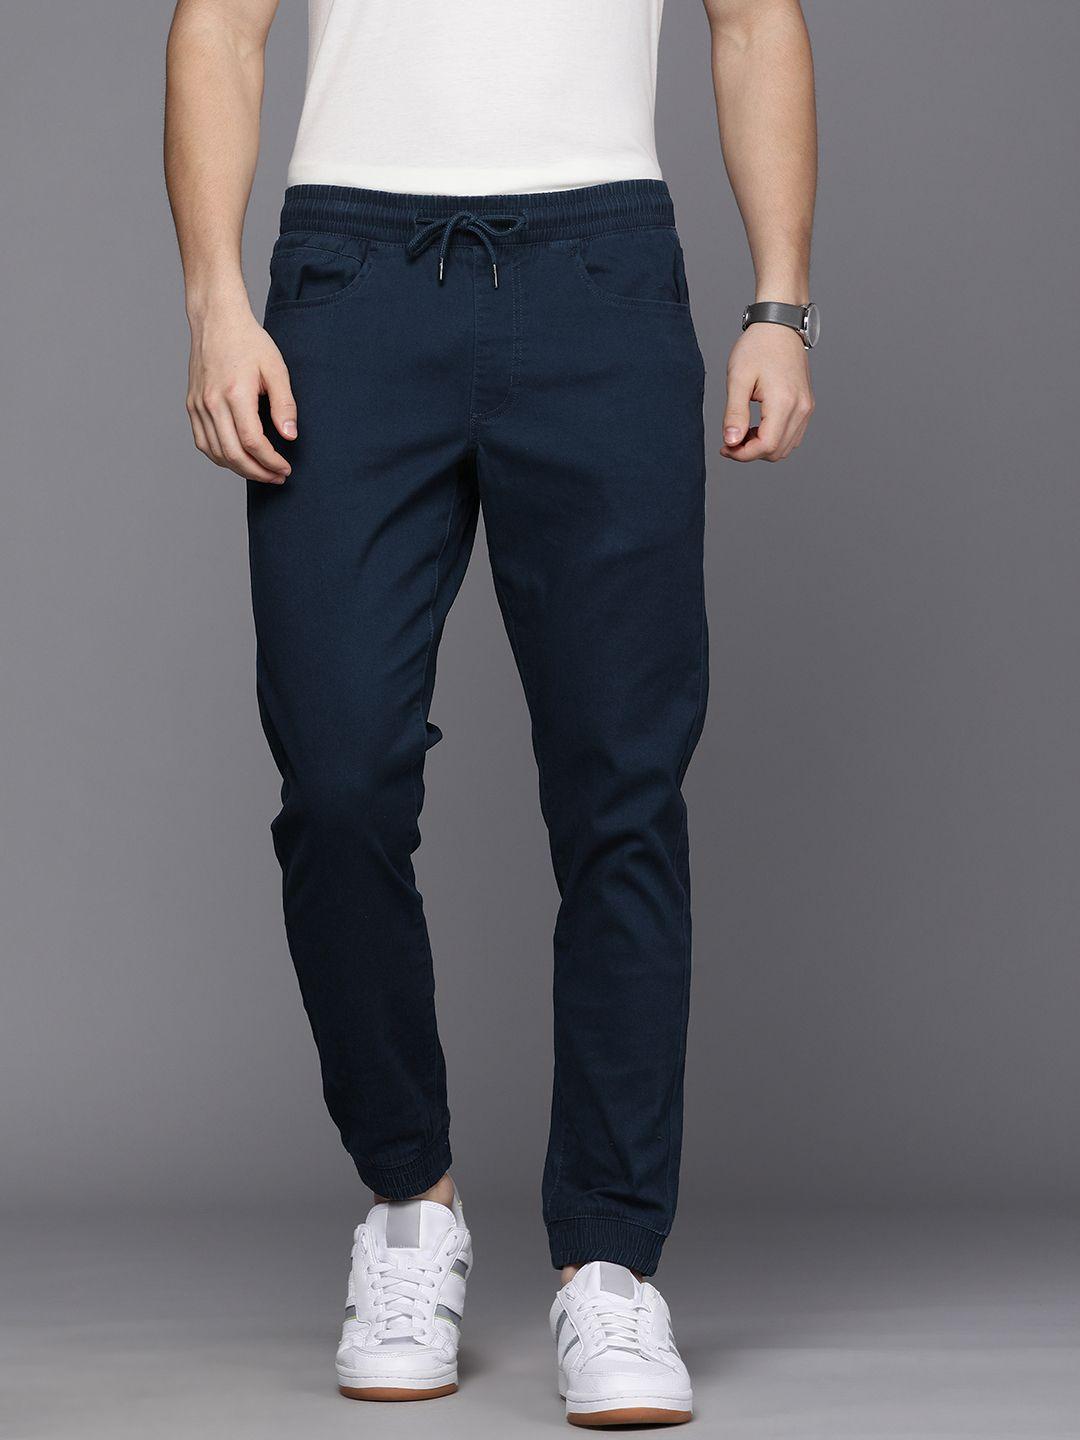 louis philippe jeans men navy blue joggers fit low-rise  trousers